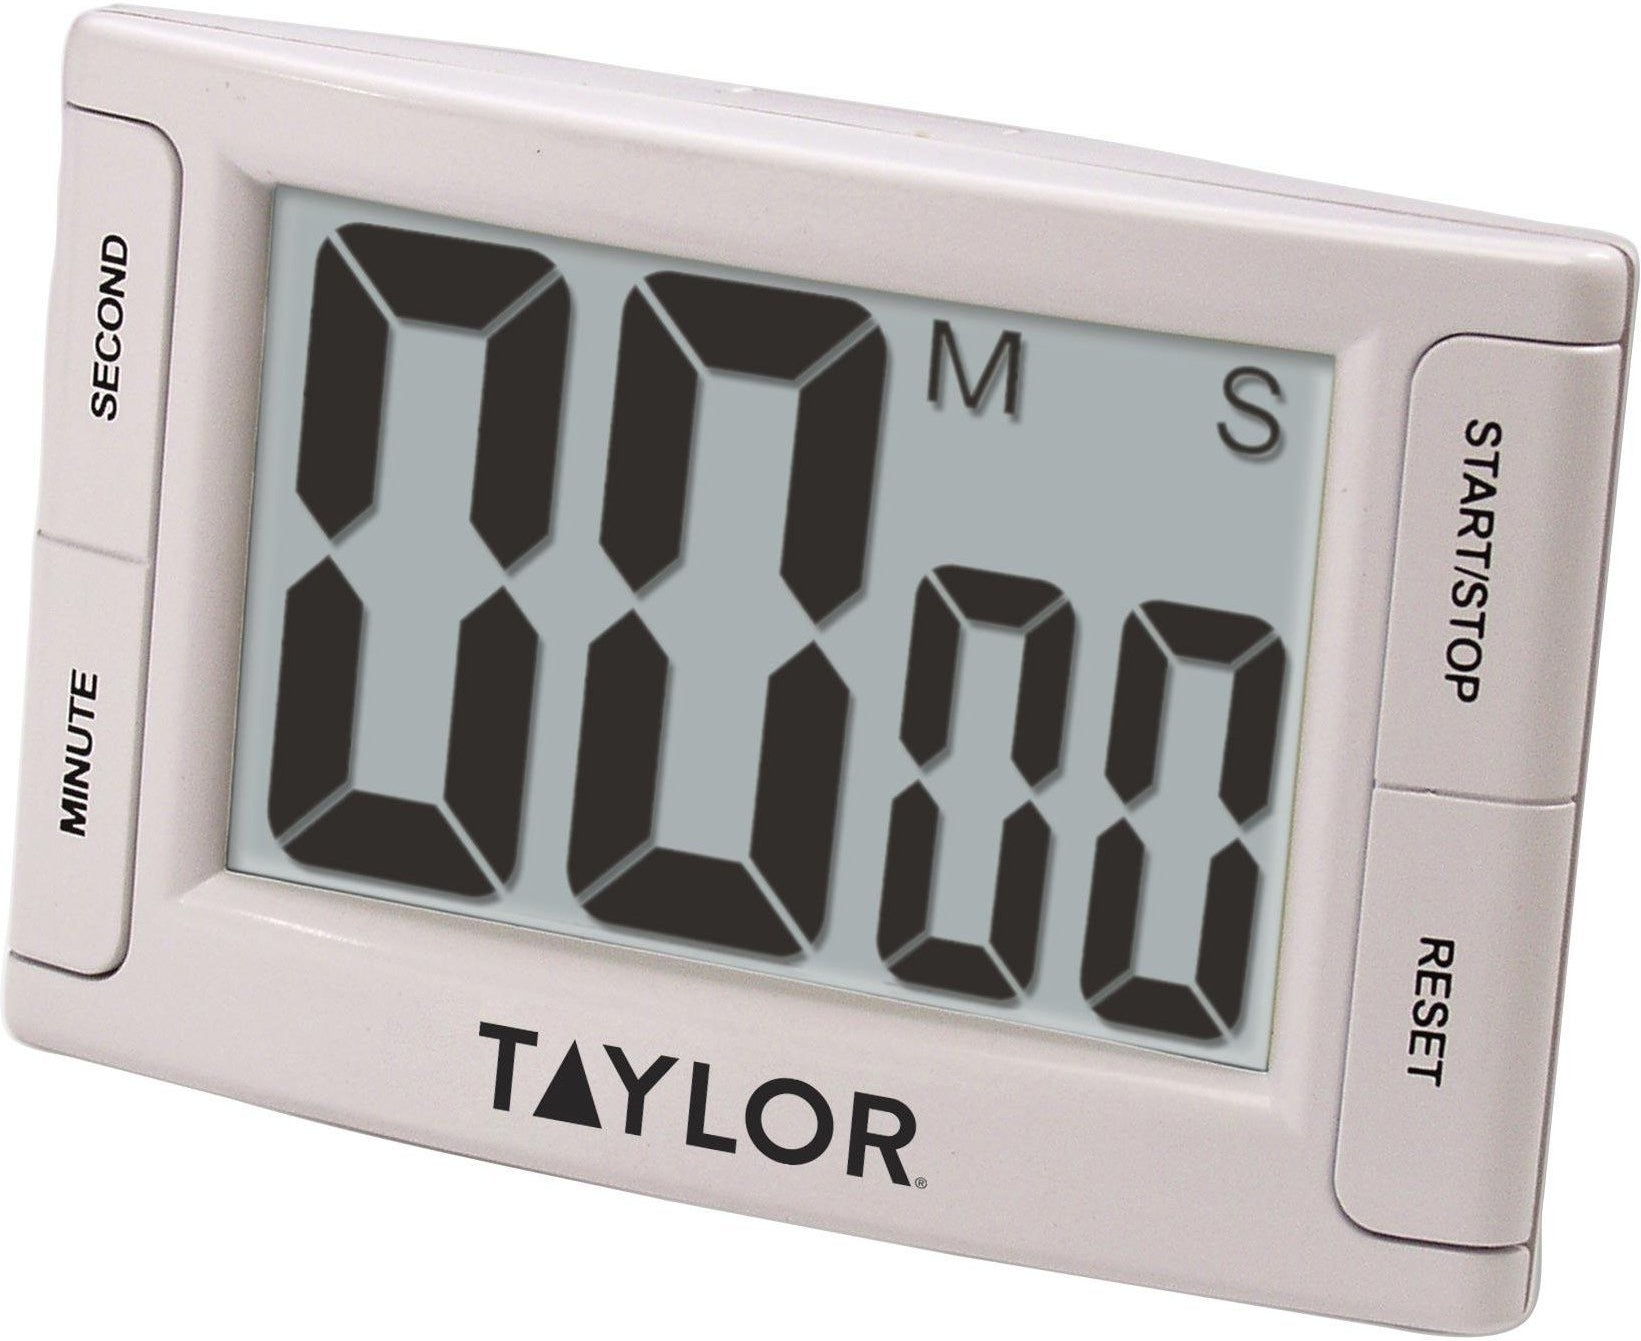 Taylor - Jumbo Readout Digital Timer - 5896